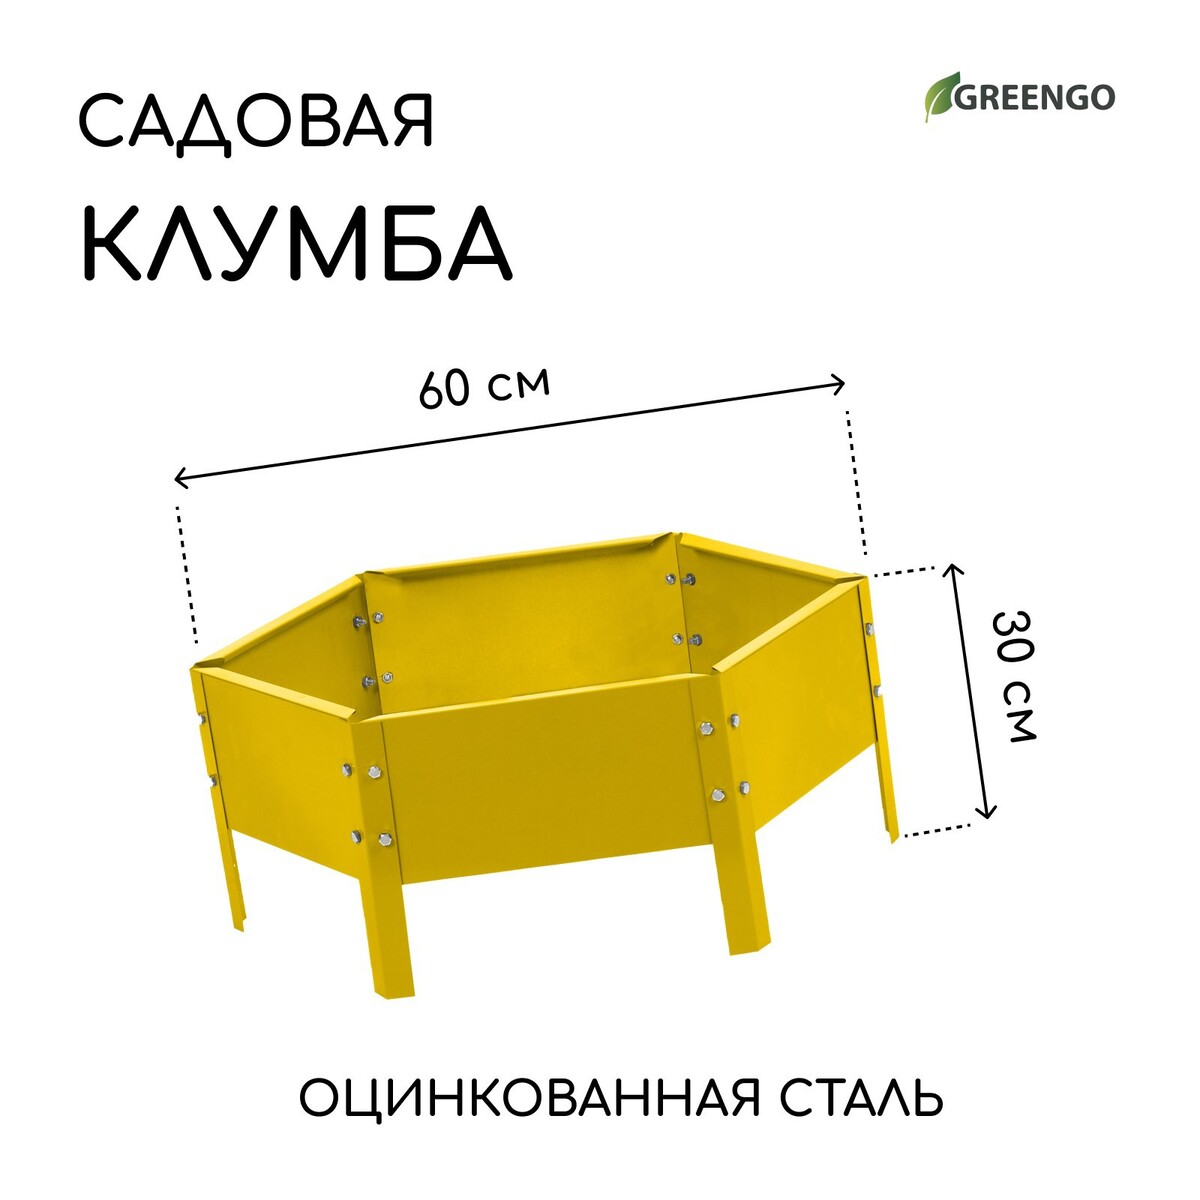 Клумба оцинкованная, d = 60 см, h = 15 см, желтая, greengo din рейка l 100 оцинкованная желтый